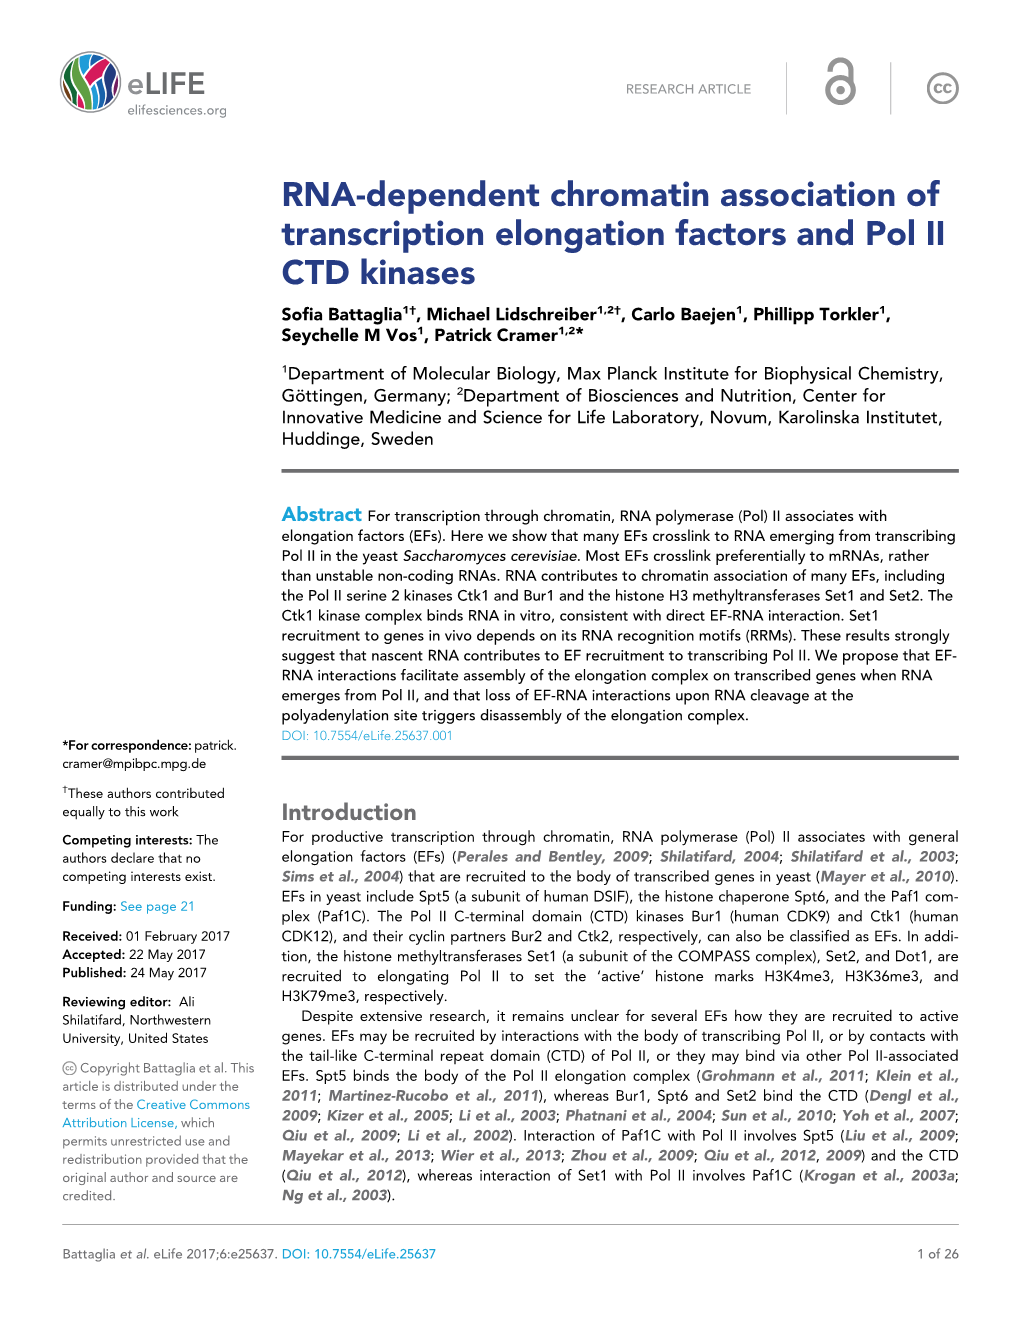 RNA-Dependent Chromatin Association of Transcription